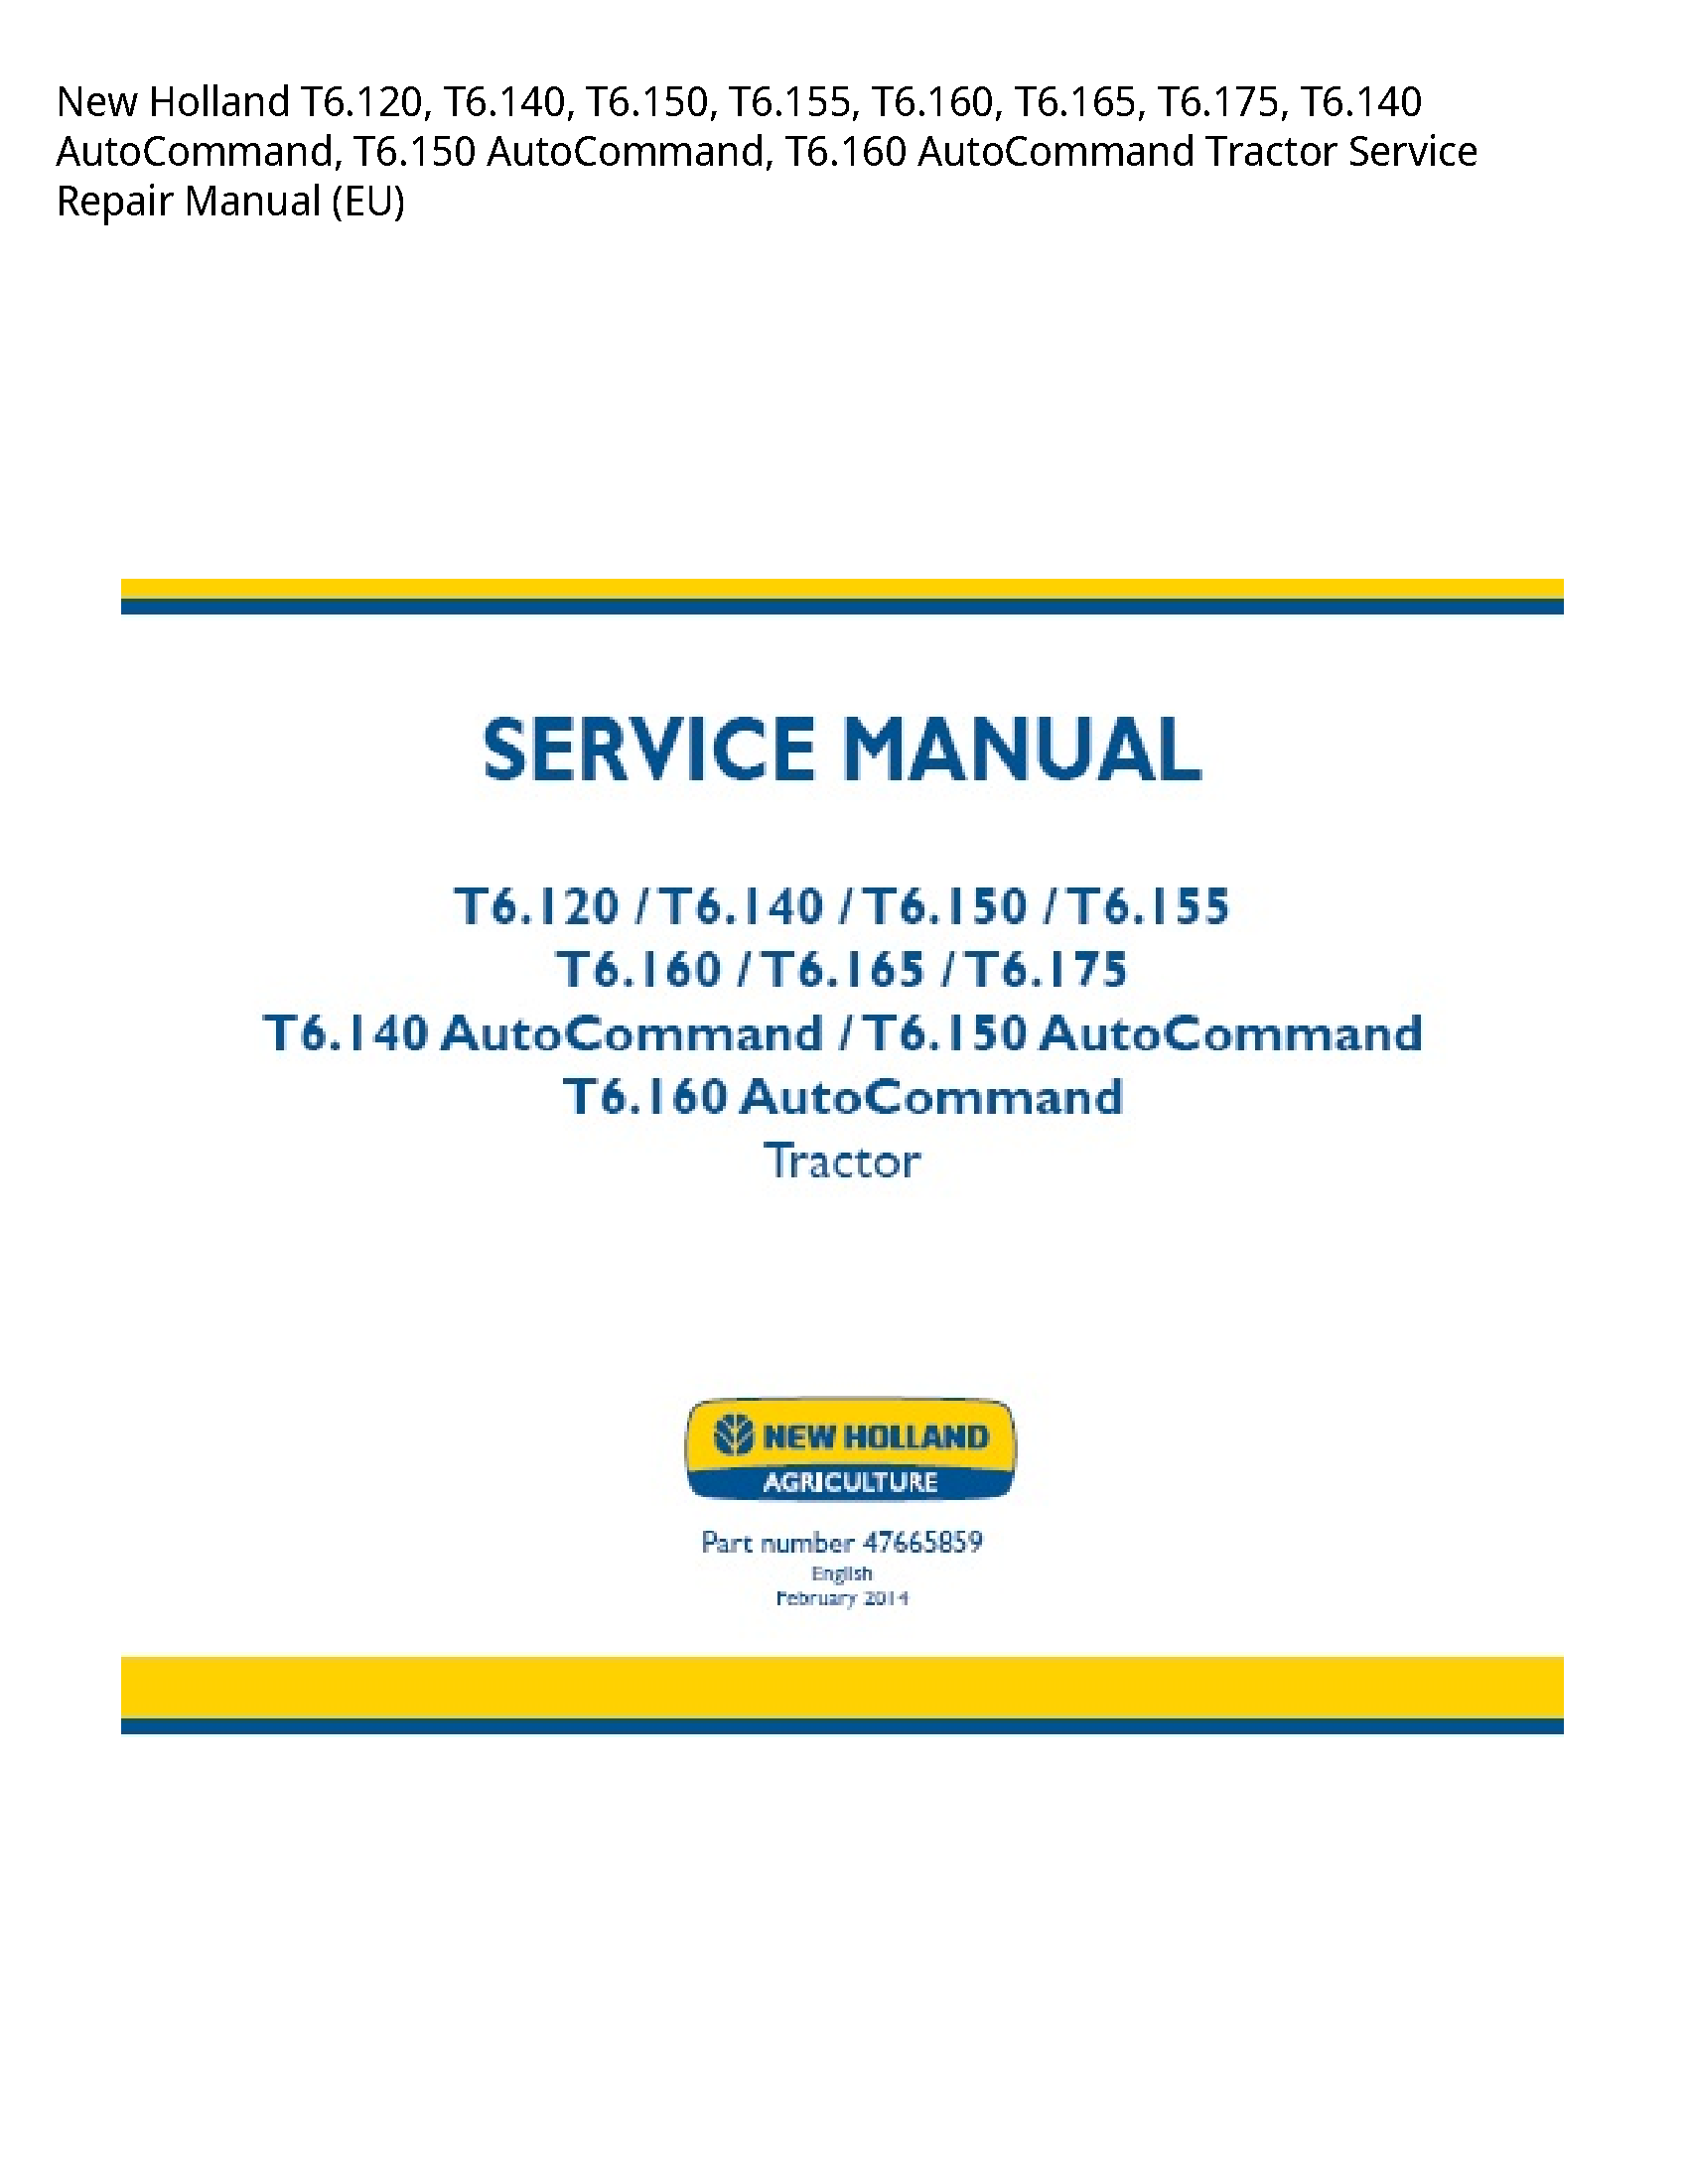 New Holland T6.120 AutoCommand manual